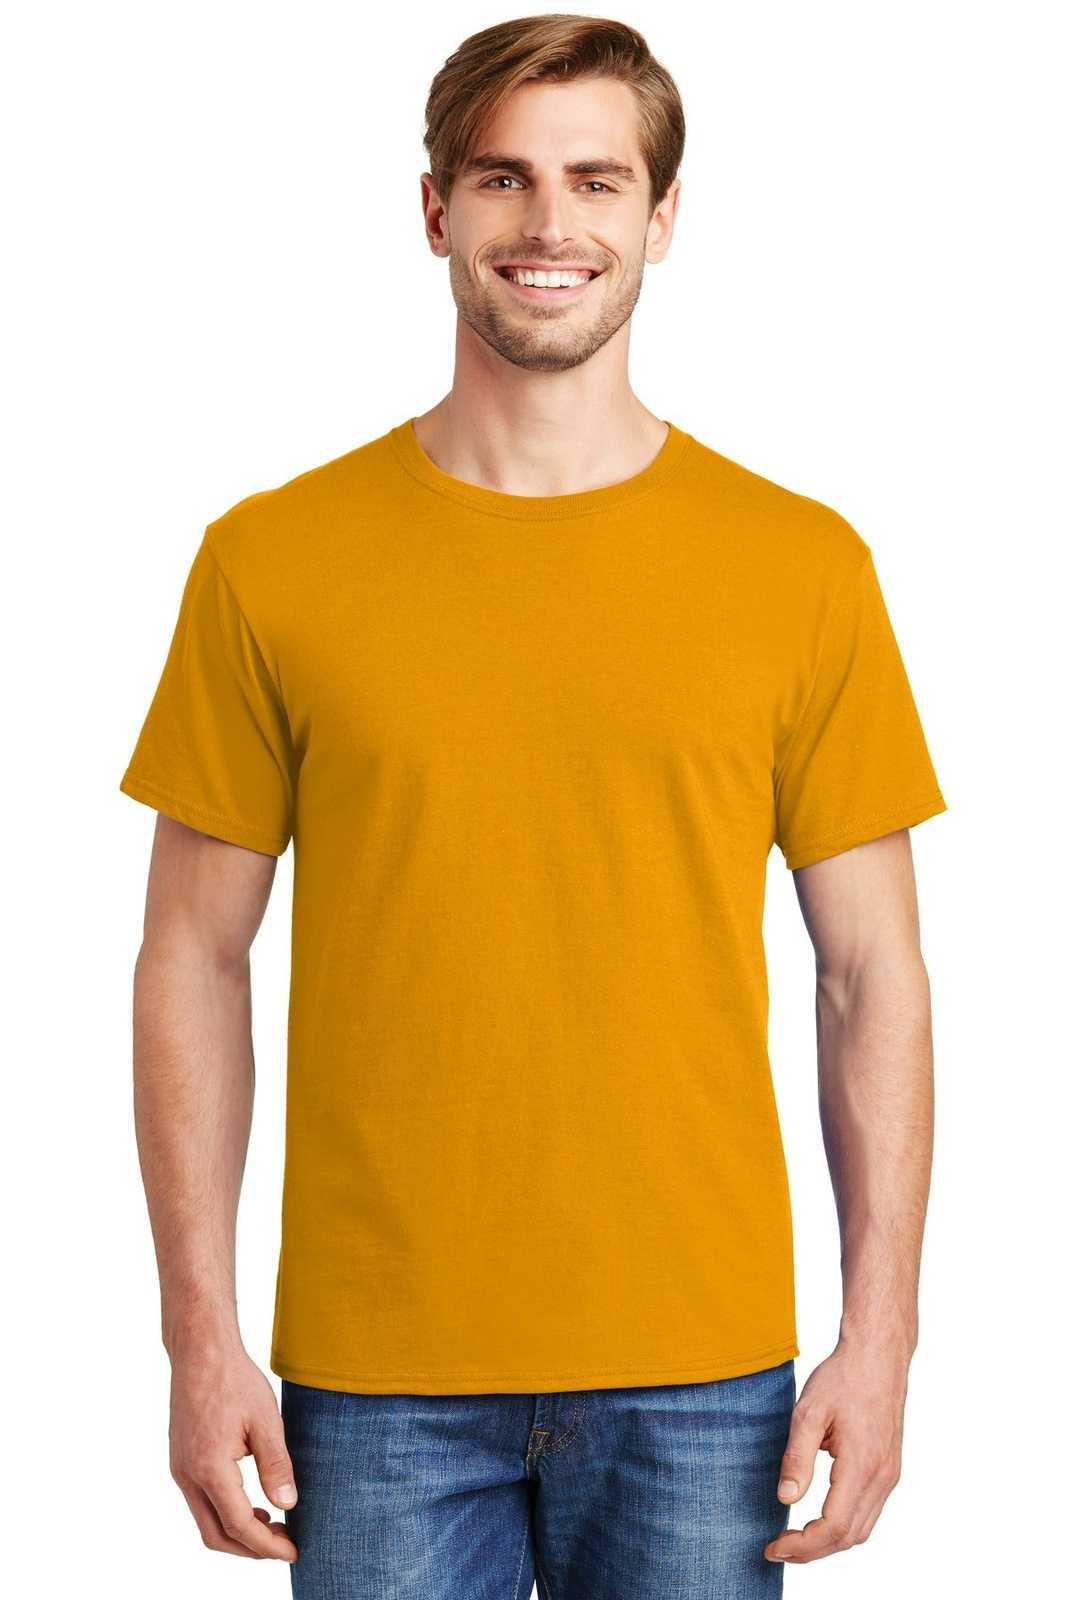 Hanes 5280 Comfortsoft 100% Cotton T-Shirt - Gold - HIT a Double